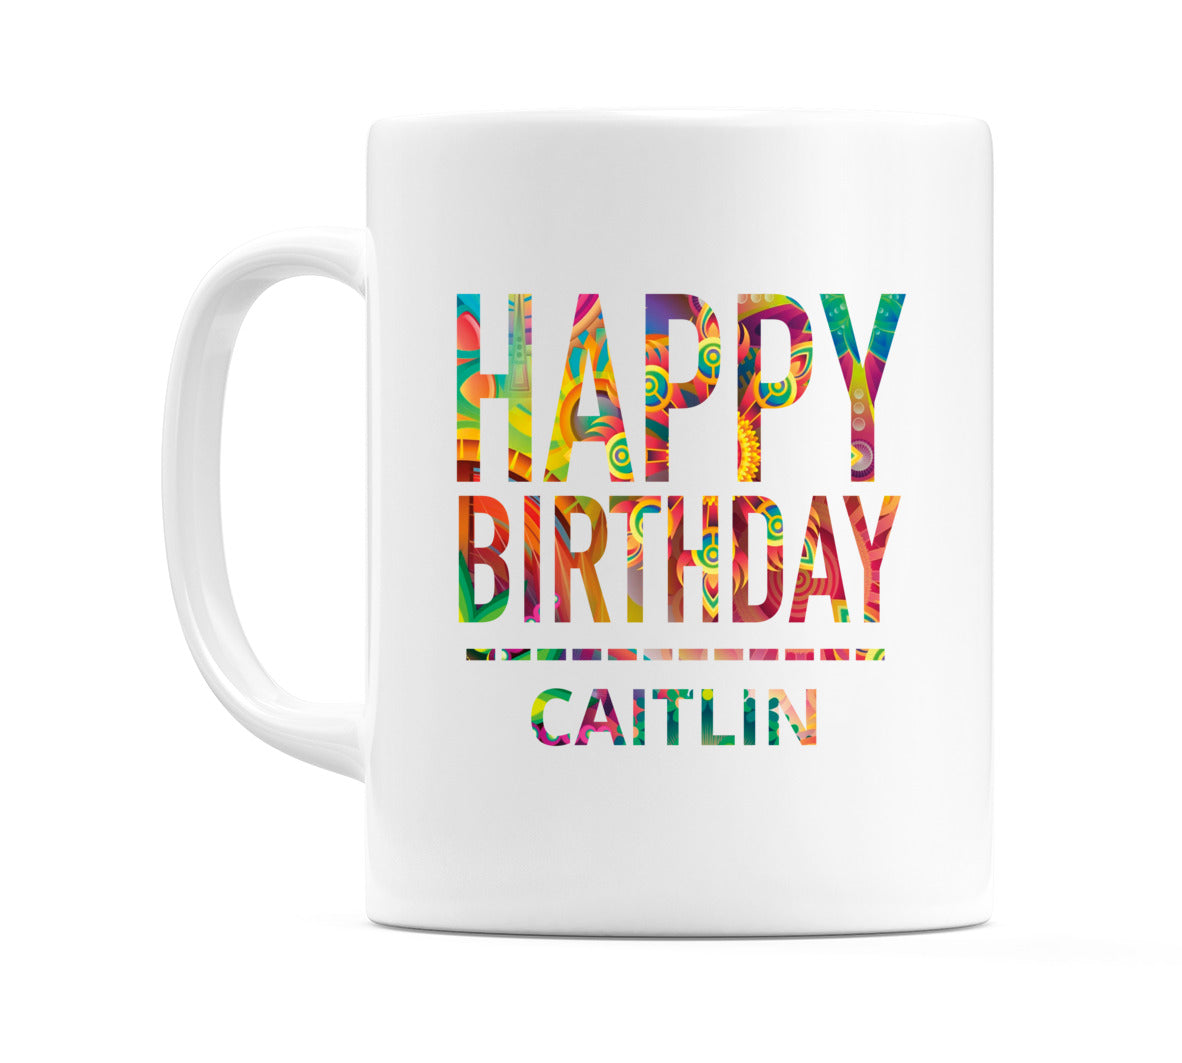 Happy Birthday Caitlin (Tie Dye Effect) Mug Cup by WeDoMugs